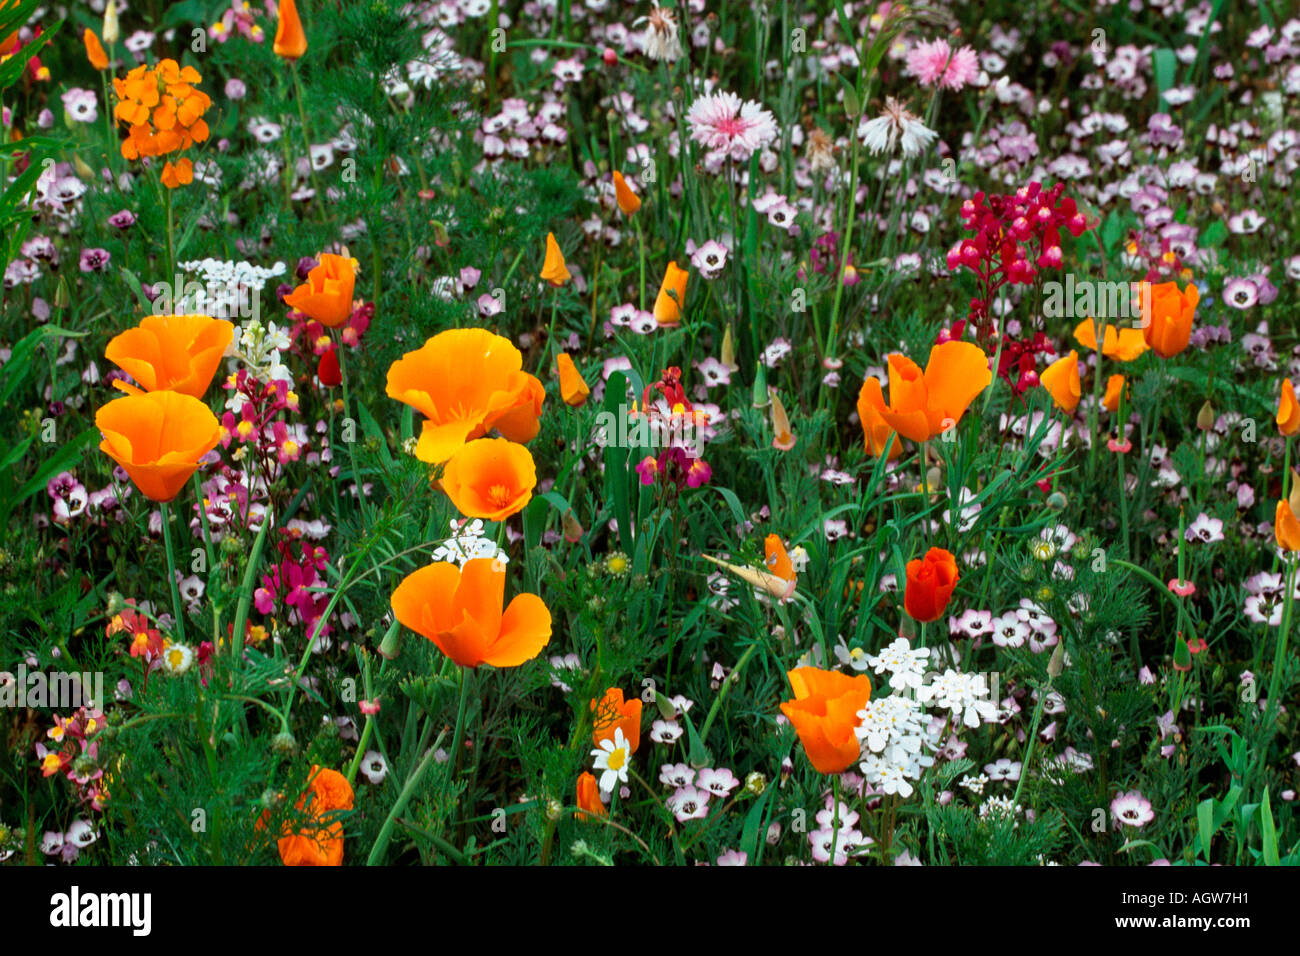 Flower Meadow / Blumenwiese Banque D'Images